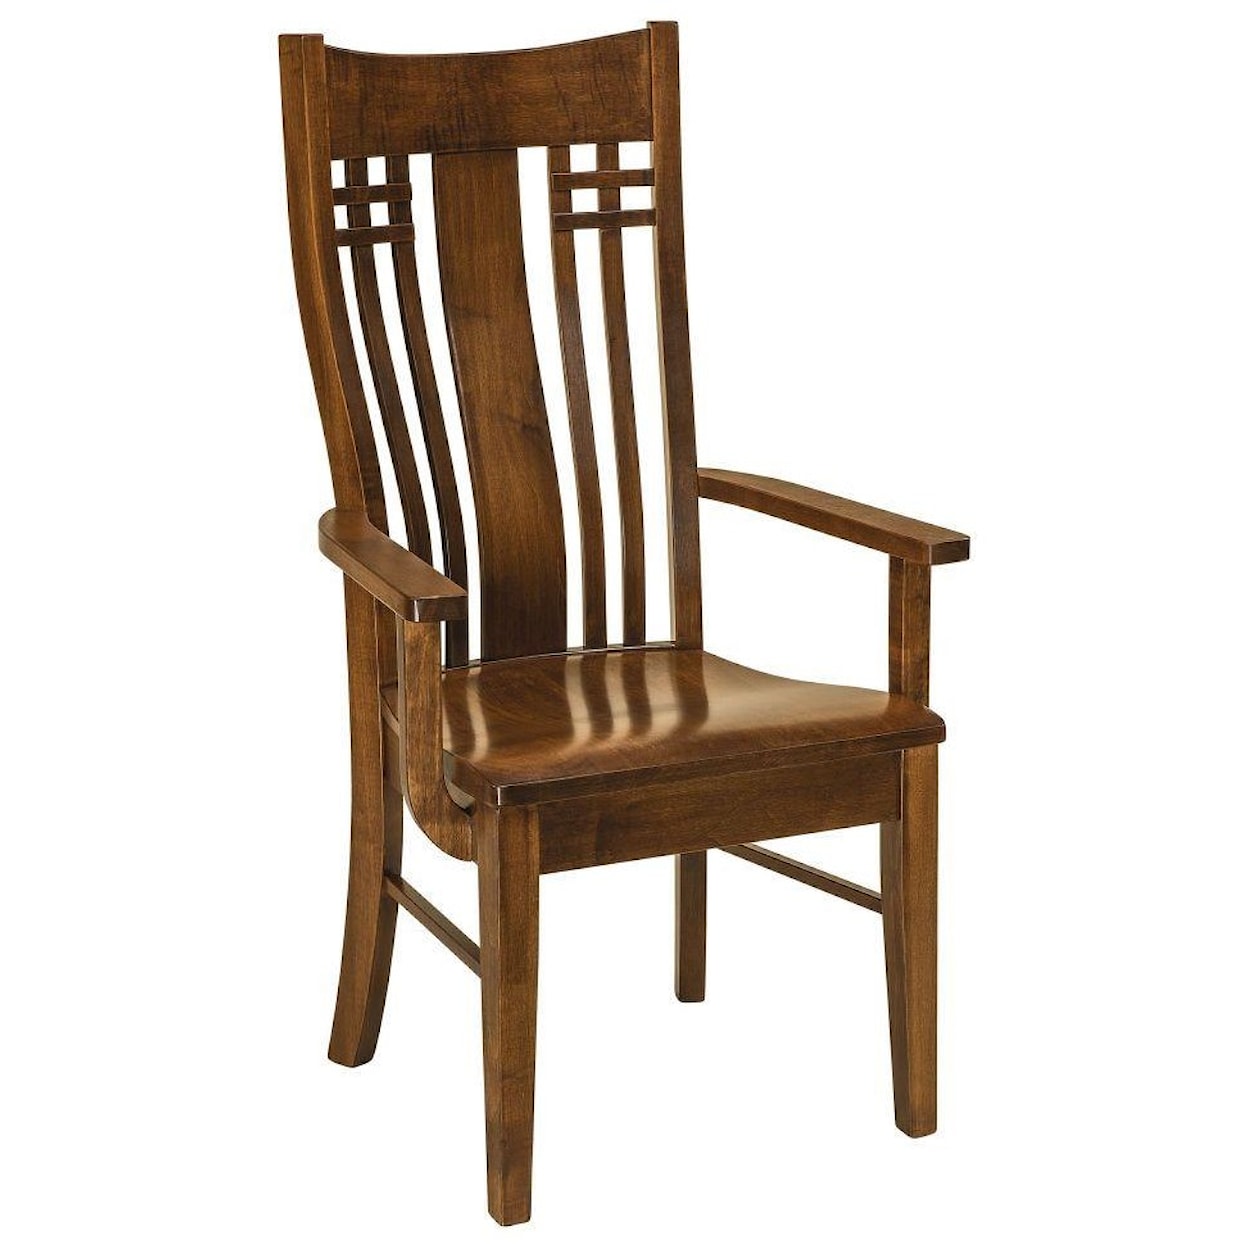 F&N Woodworking Bennett Arm Chair